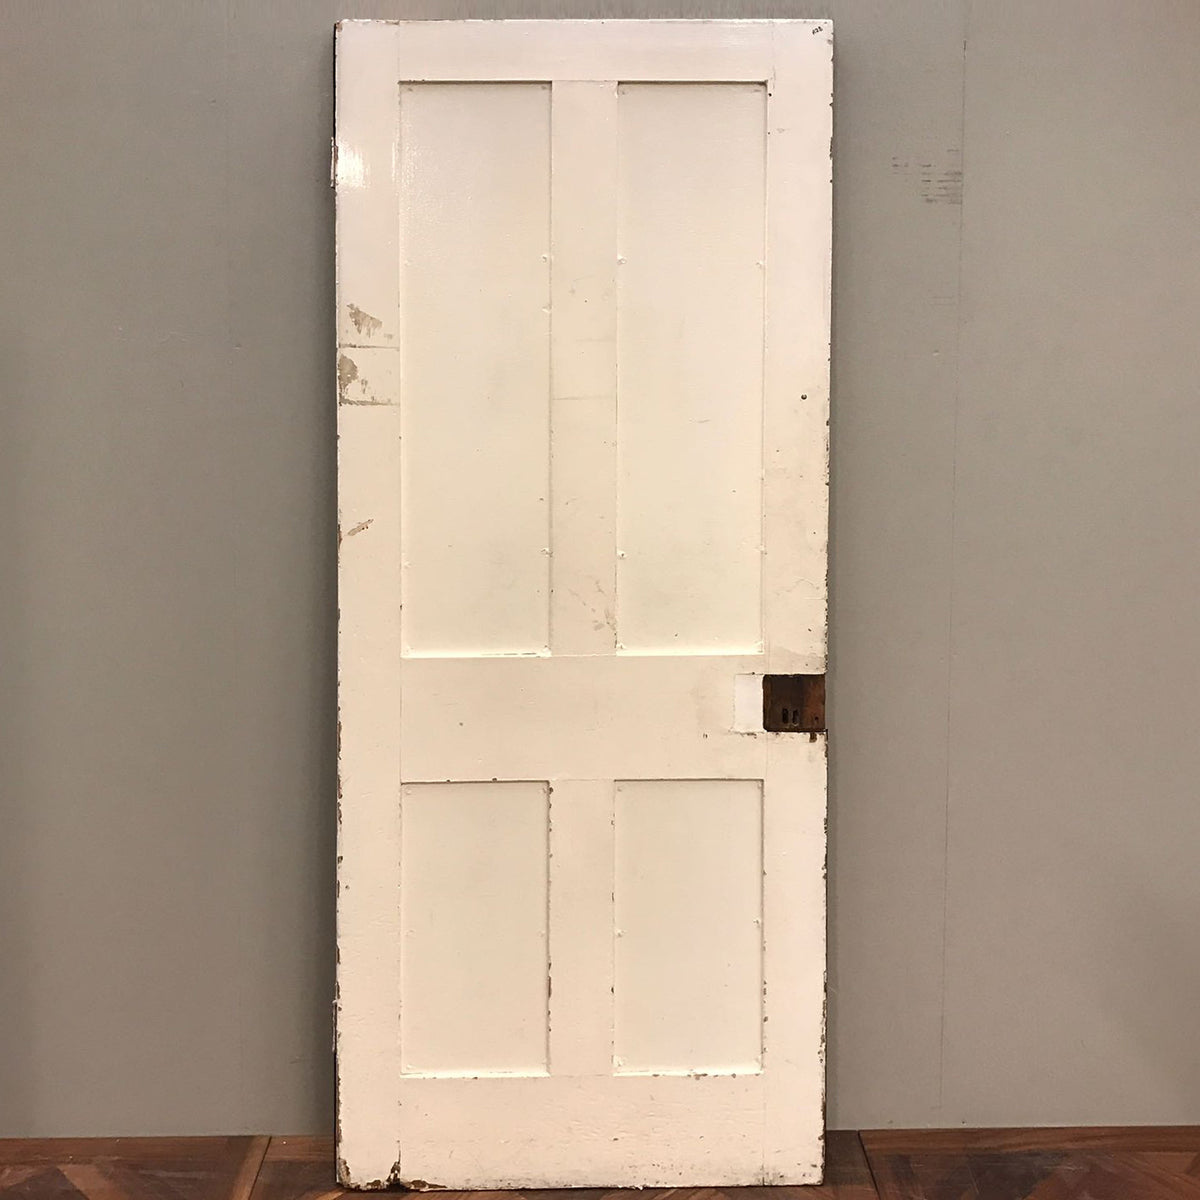 Reclaimed Victorian Four Panel Door - 206cm x 80cm x 4.5cm | The Architectural Forum